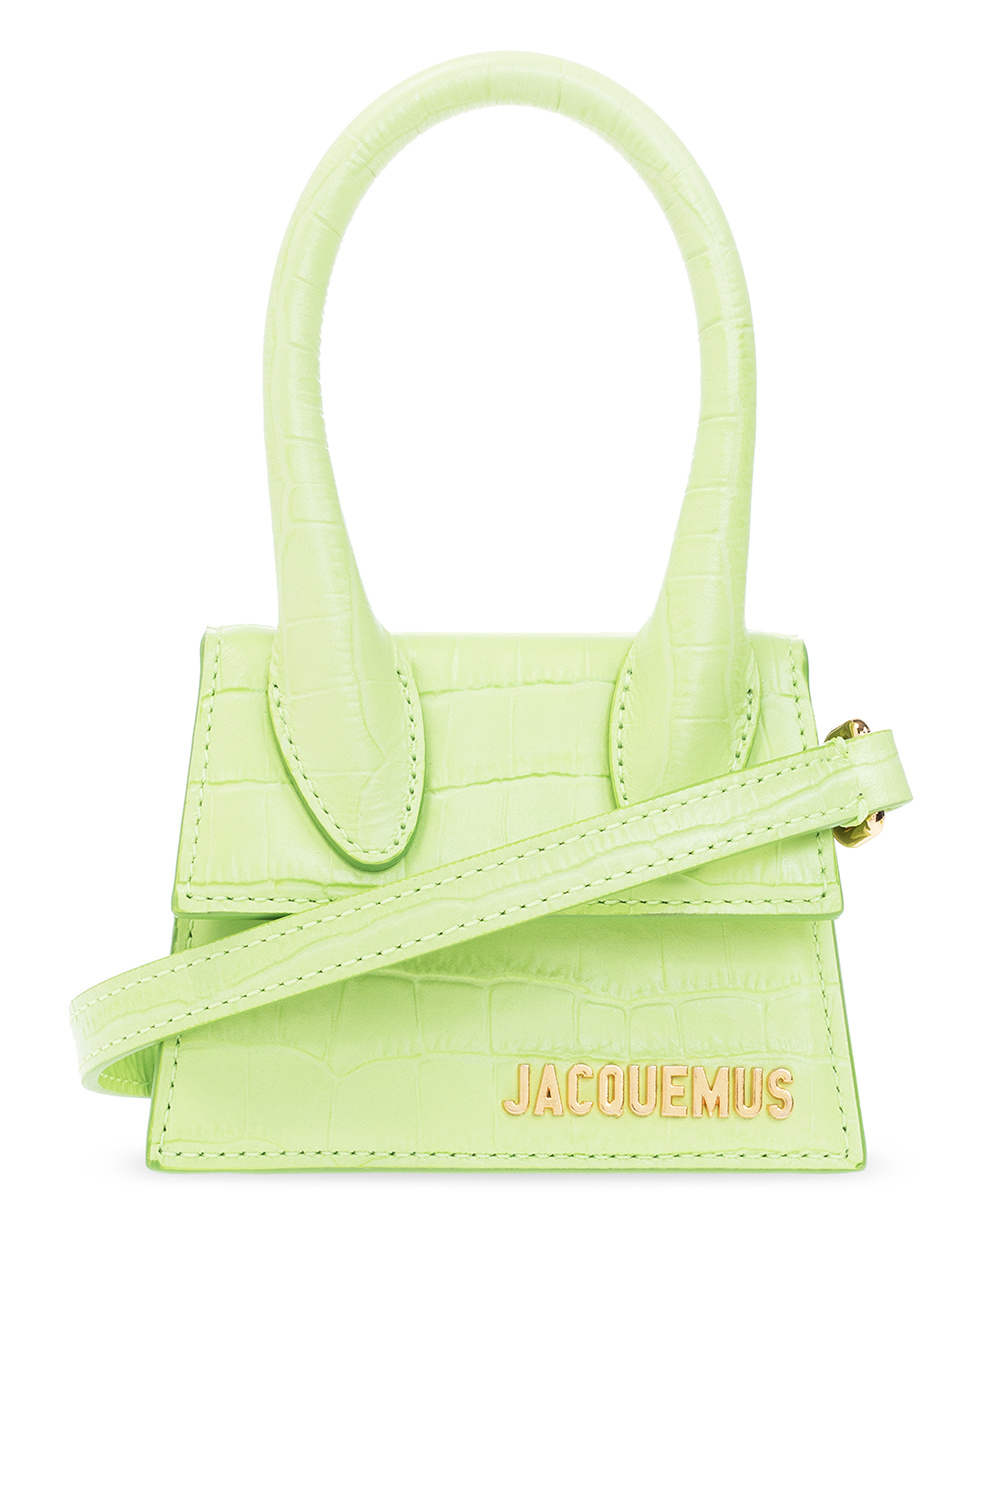 Jacquemus Le Chiquito Mini Tote Bag in Green